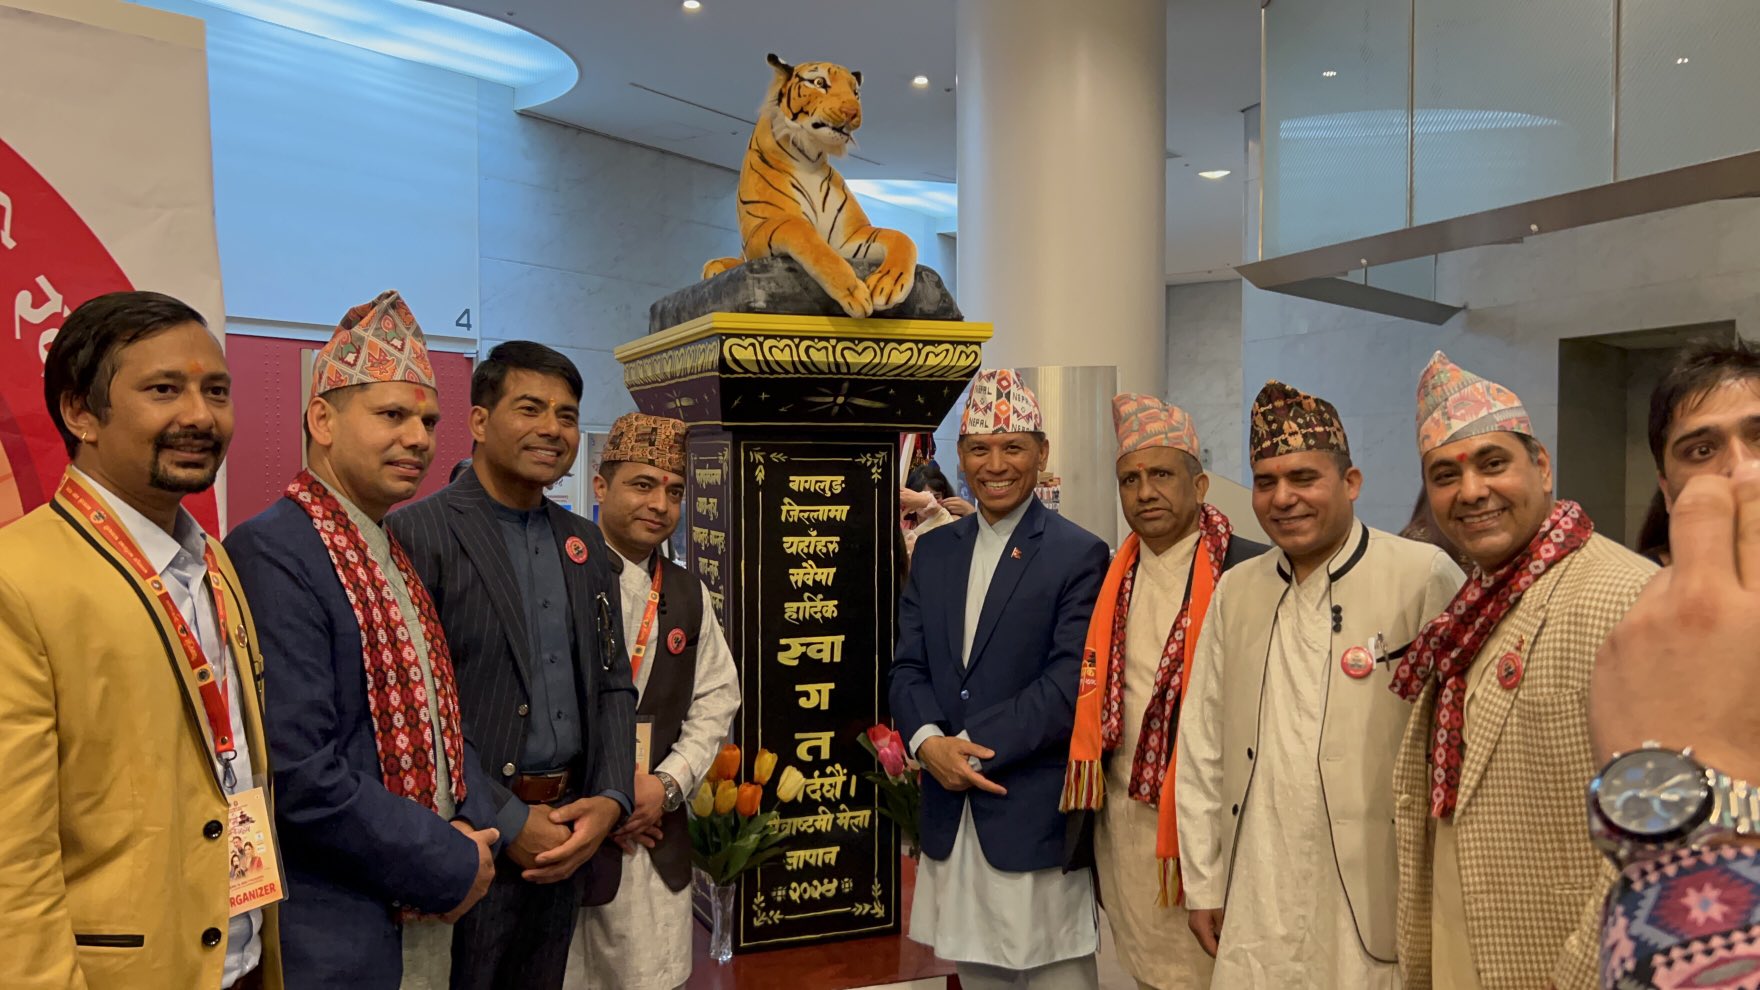 Nepali Ambassador Dr. Durga Bahadur Subedi Honored as Chief Guest at Tokyo’s Chaitrashtami Festival